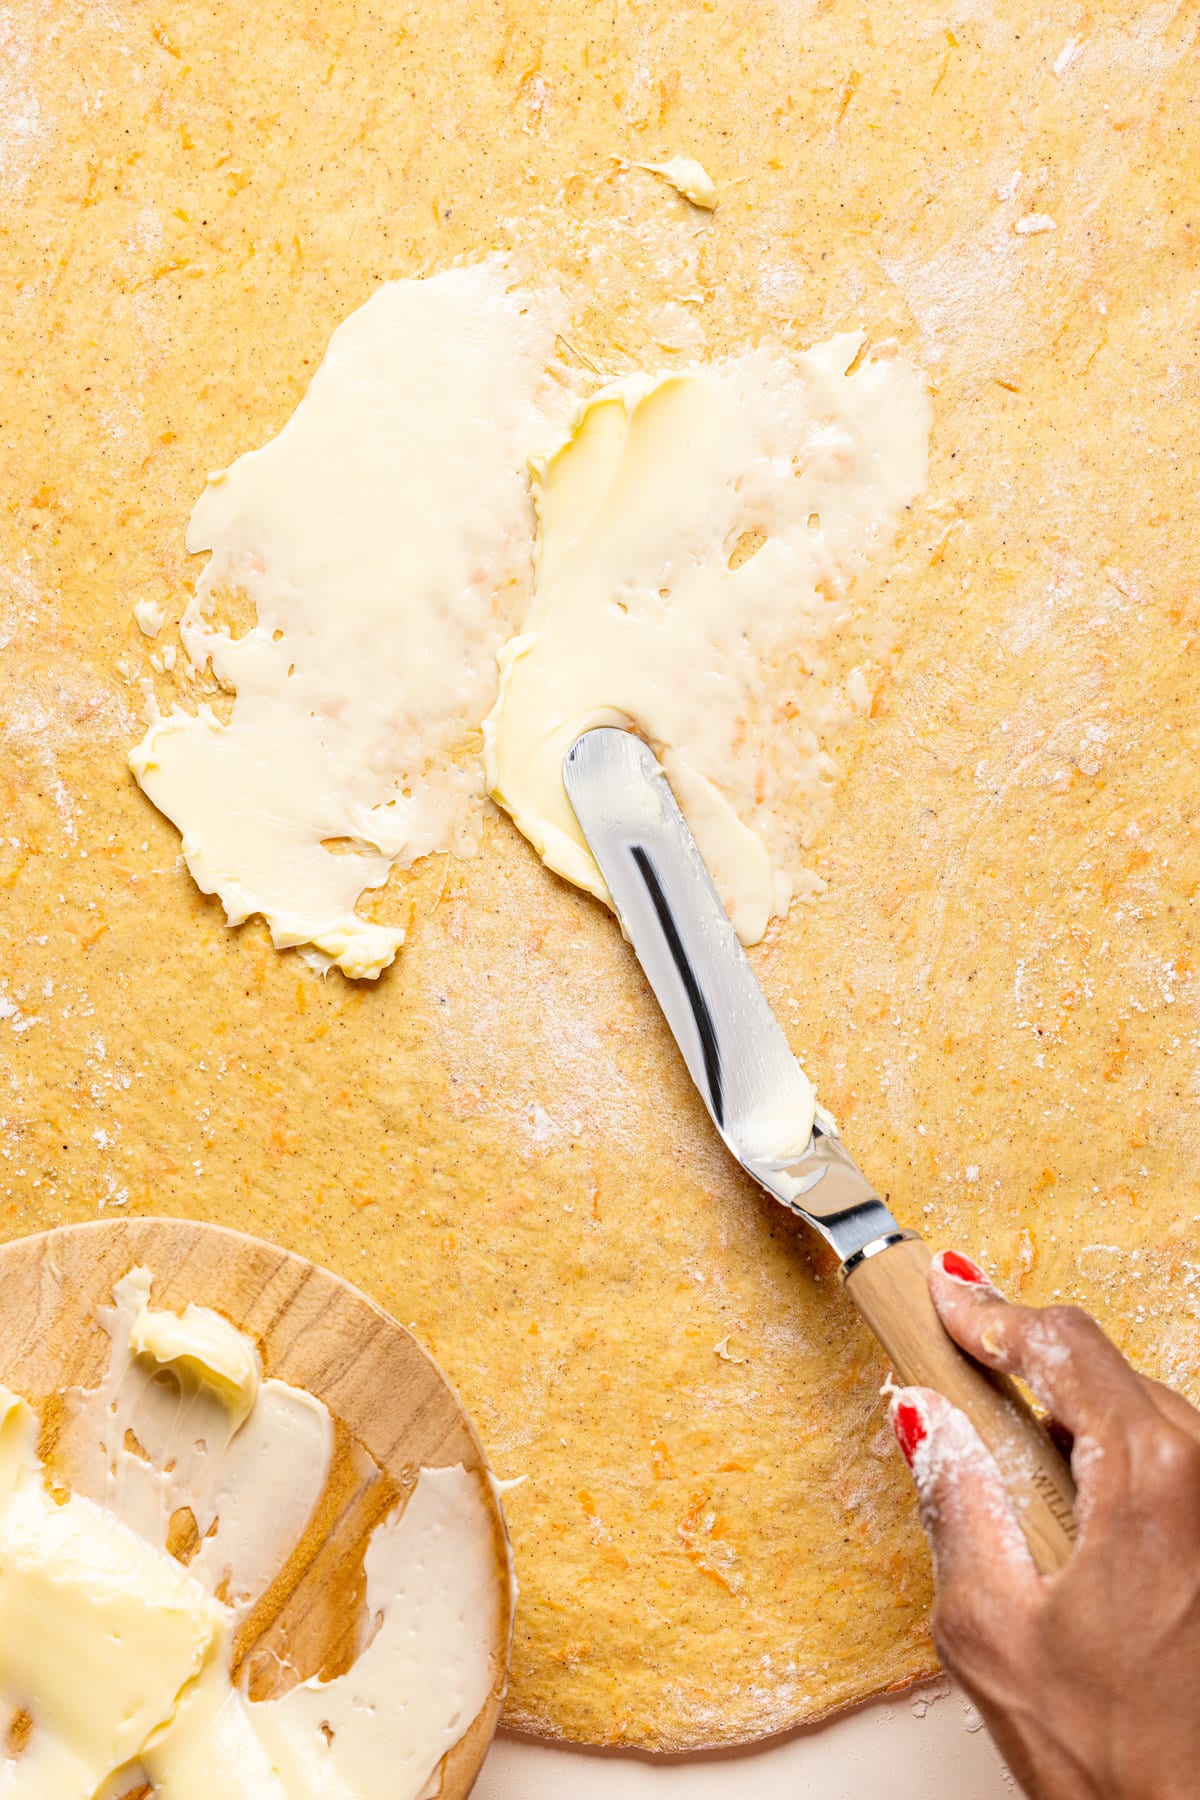 Knife spreading butter on flattened dough